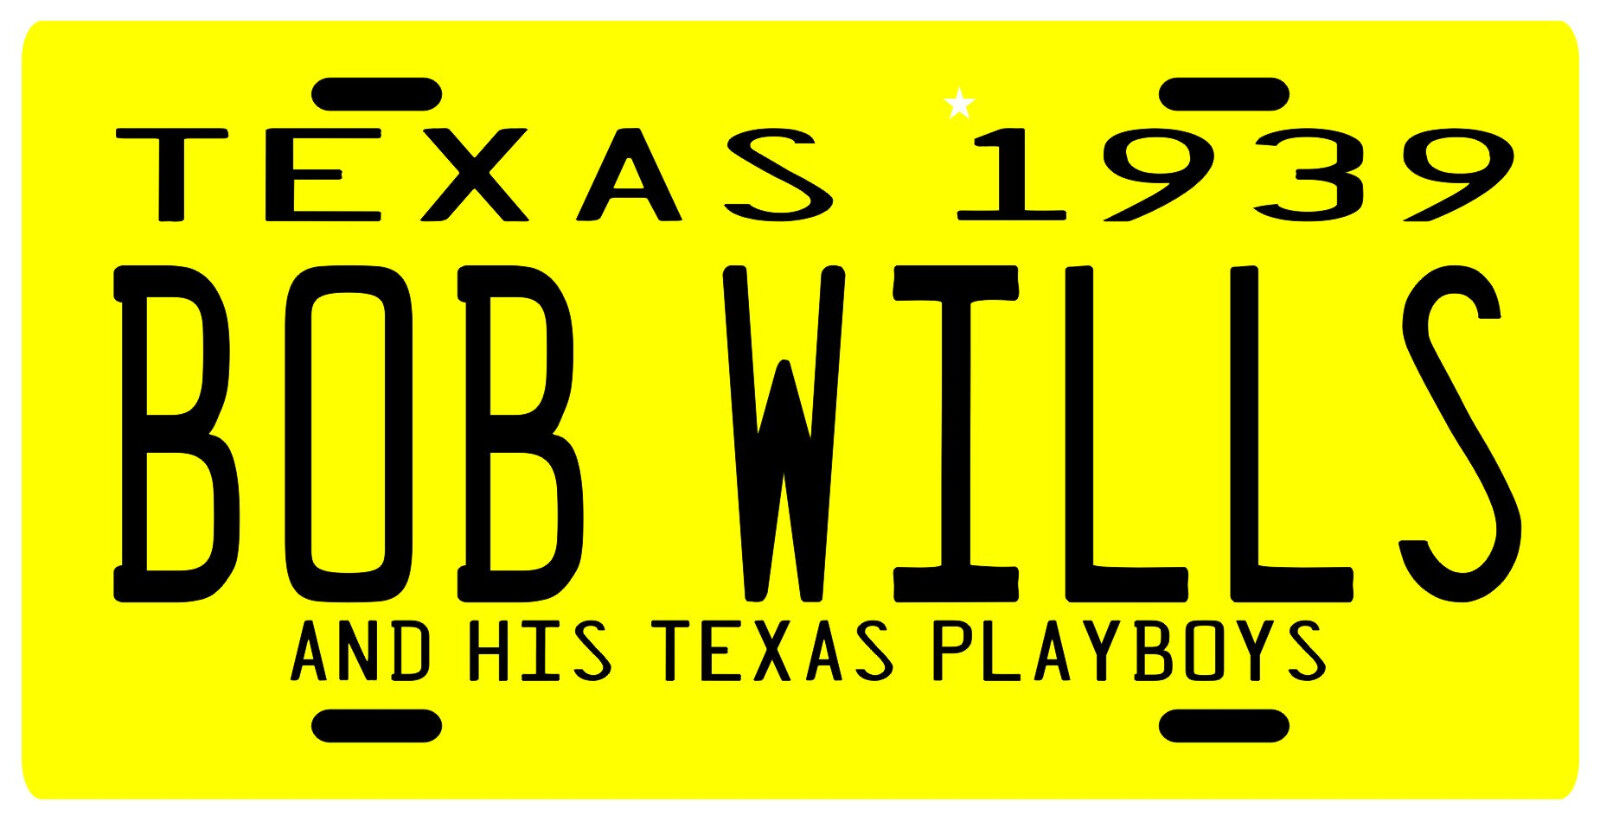 Bob Wills and His Texas Playboys 1939 Texas License plate